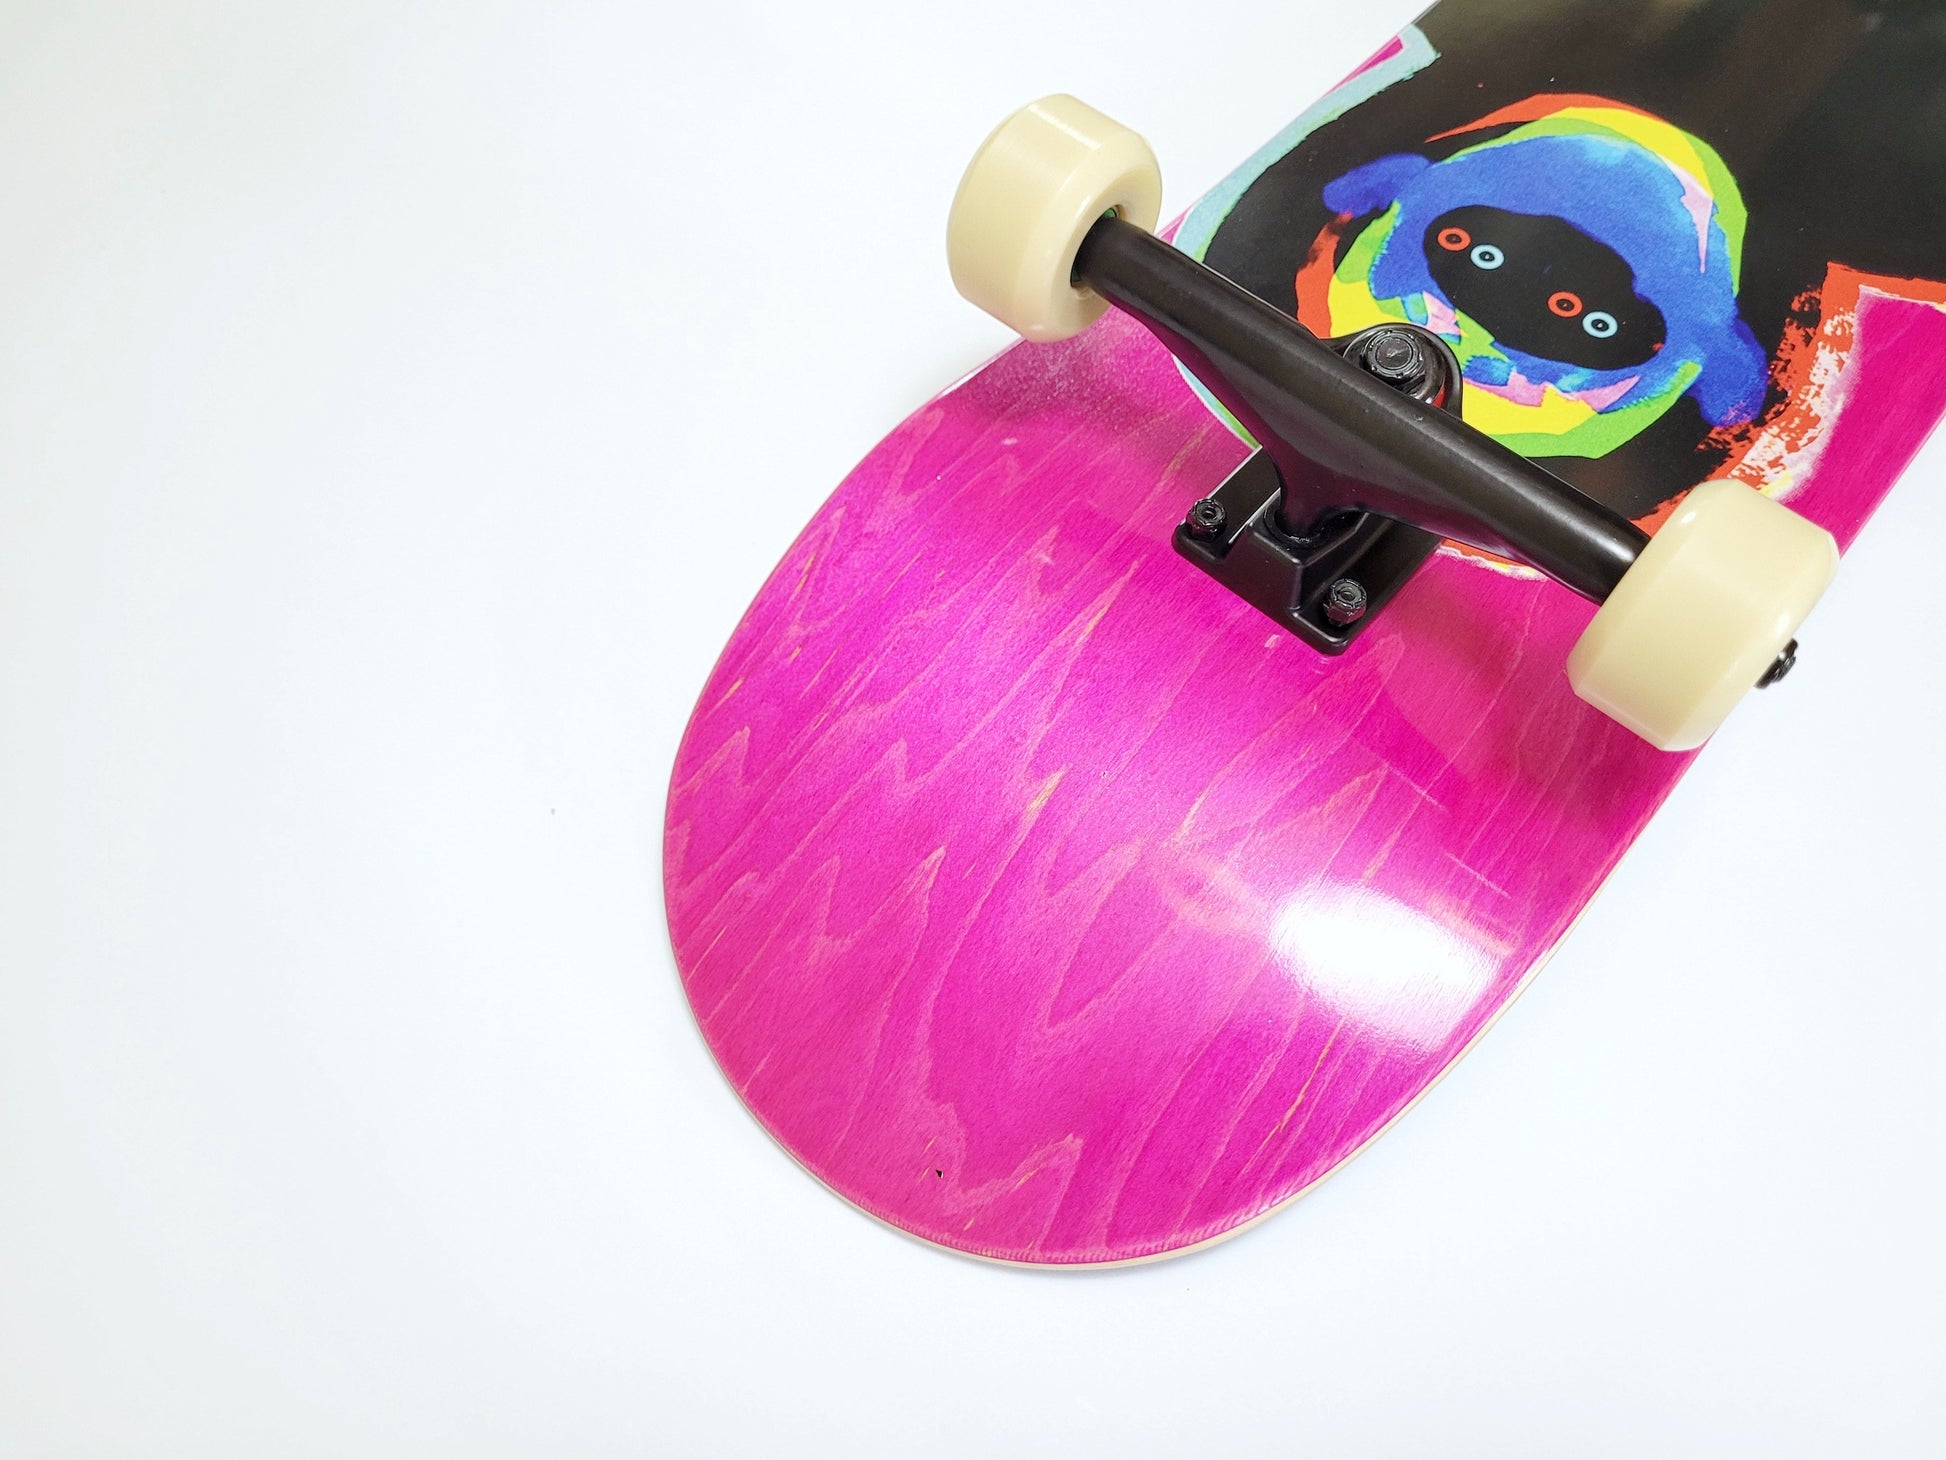 UMA 'Blur Roman' skateboard - SkatebruhSG